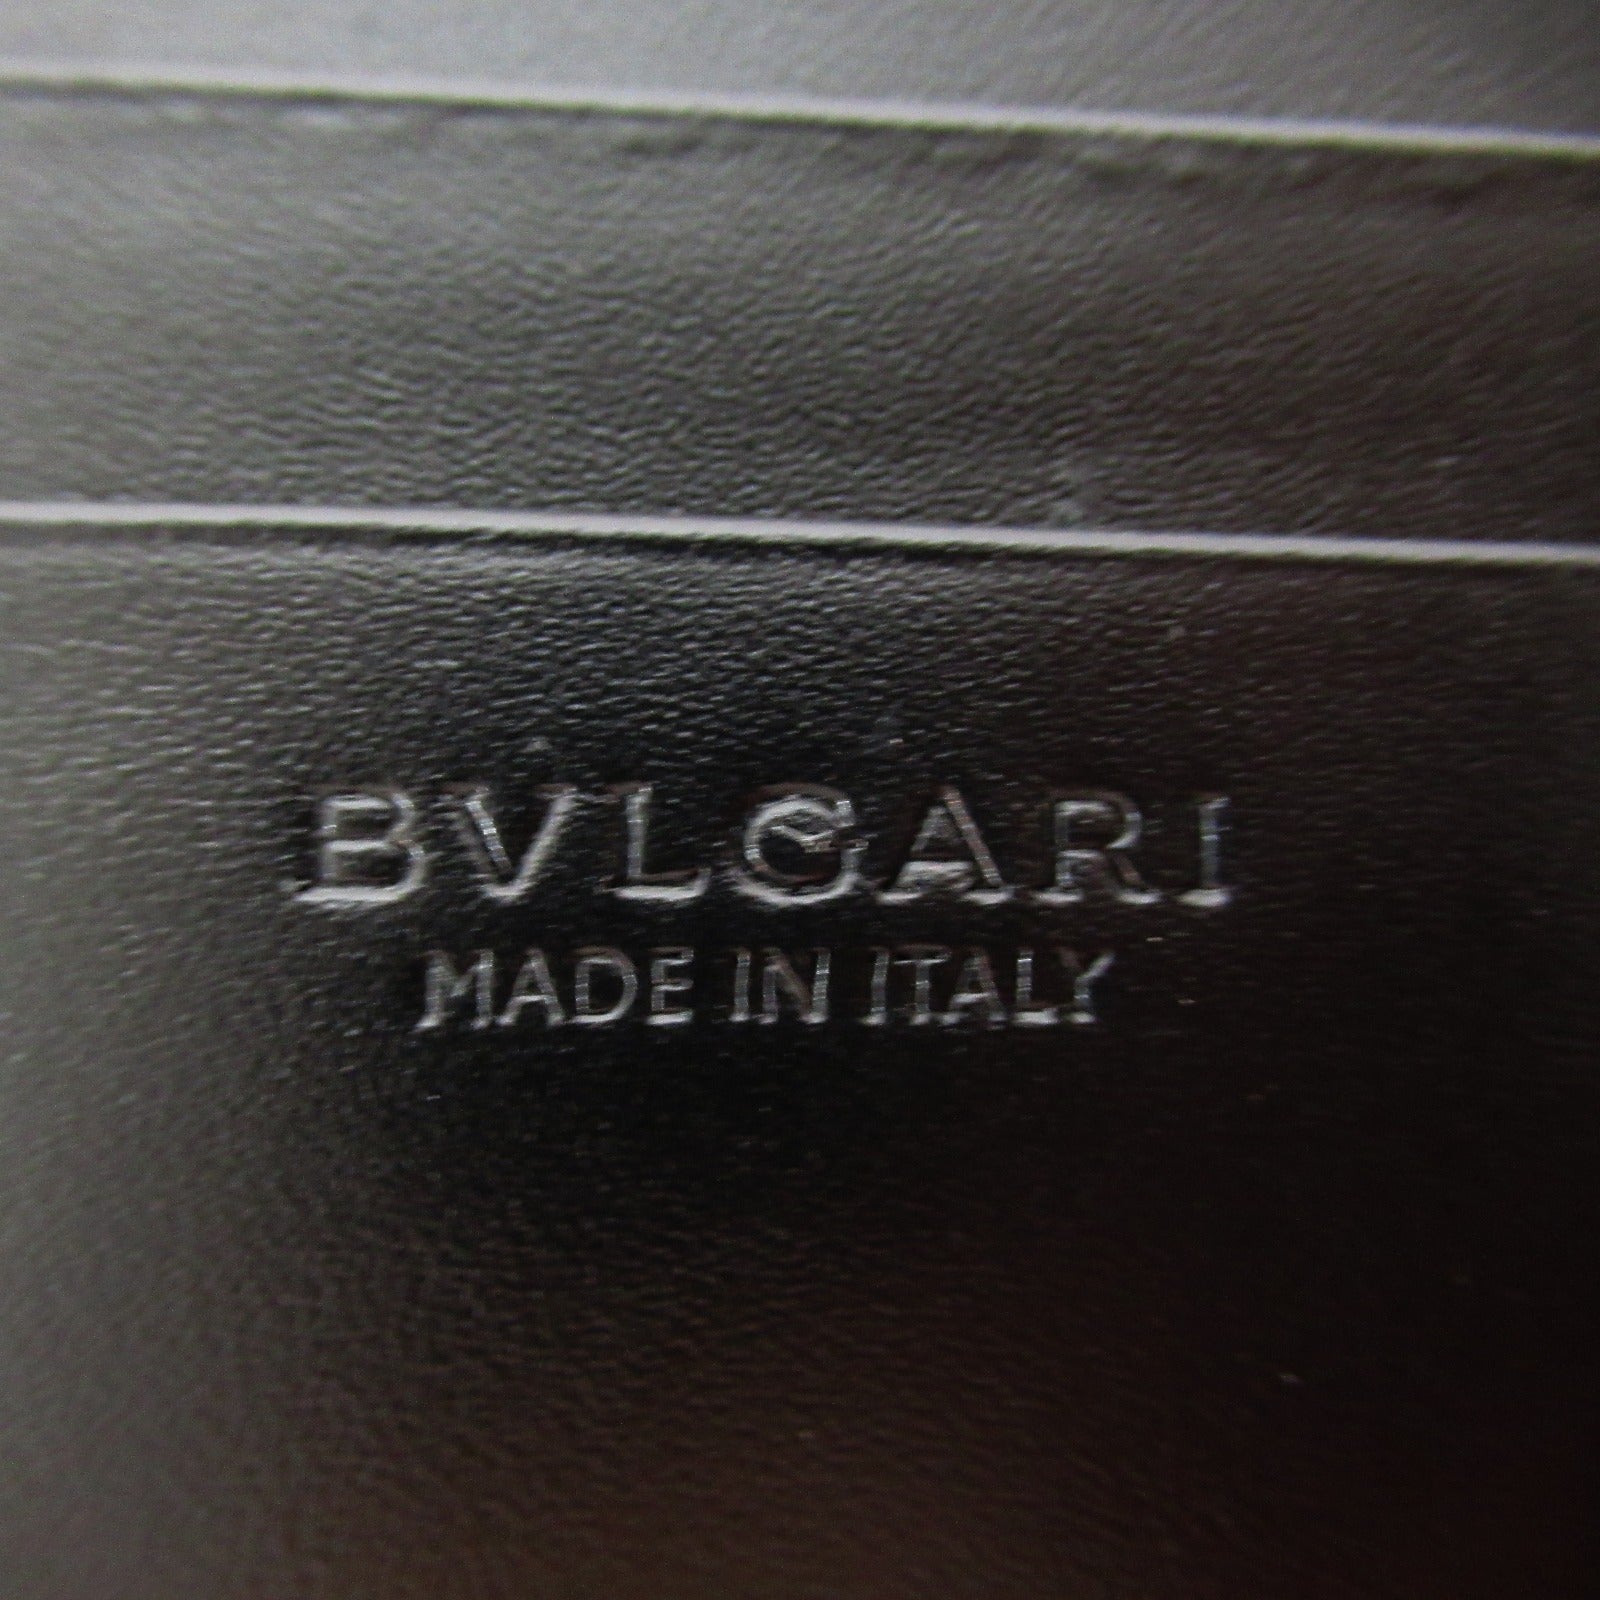 Bulgari BVLGARI Double Fable Wallet Two Foldable Wallet  Leather  Black 282852GRAIN